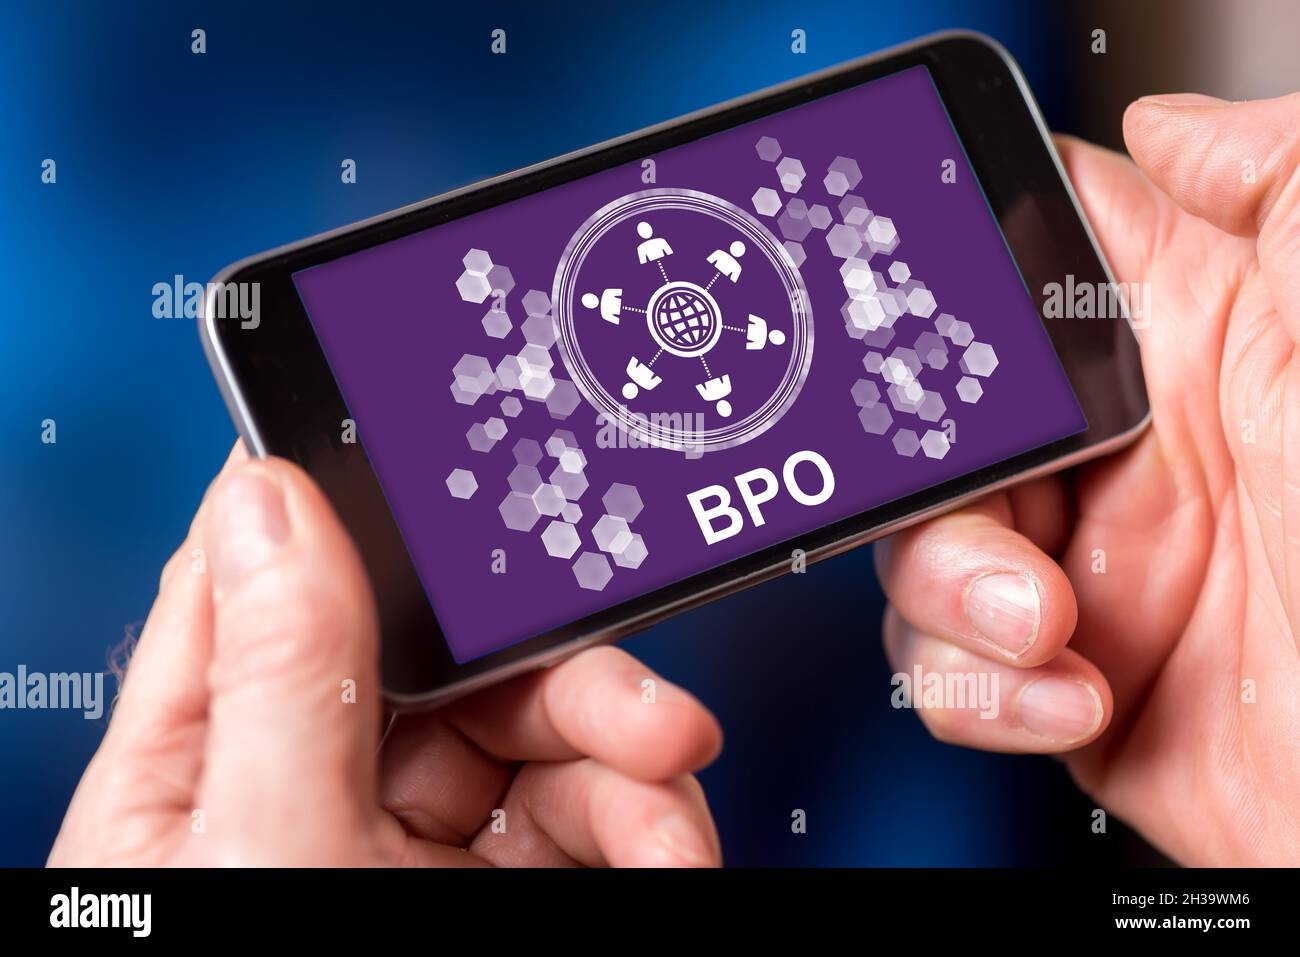 Smartphone-Bildschirm mit einem bpo-Konzept Stockfoto